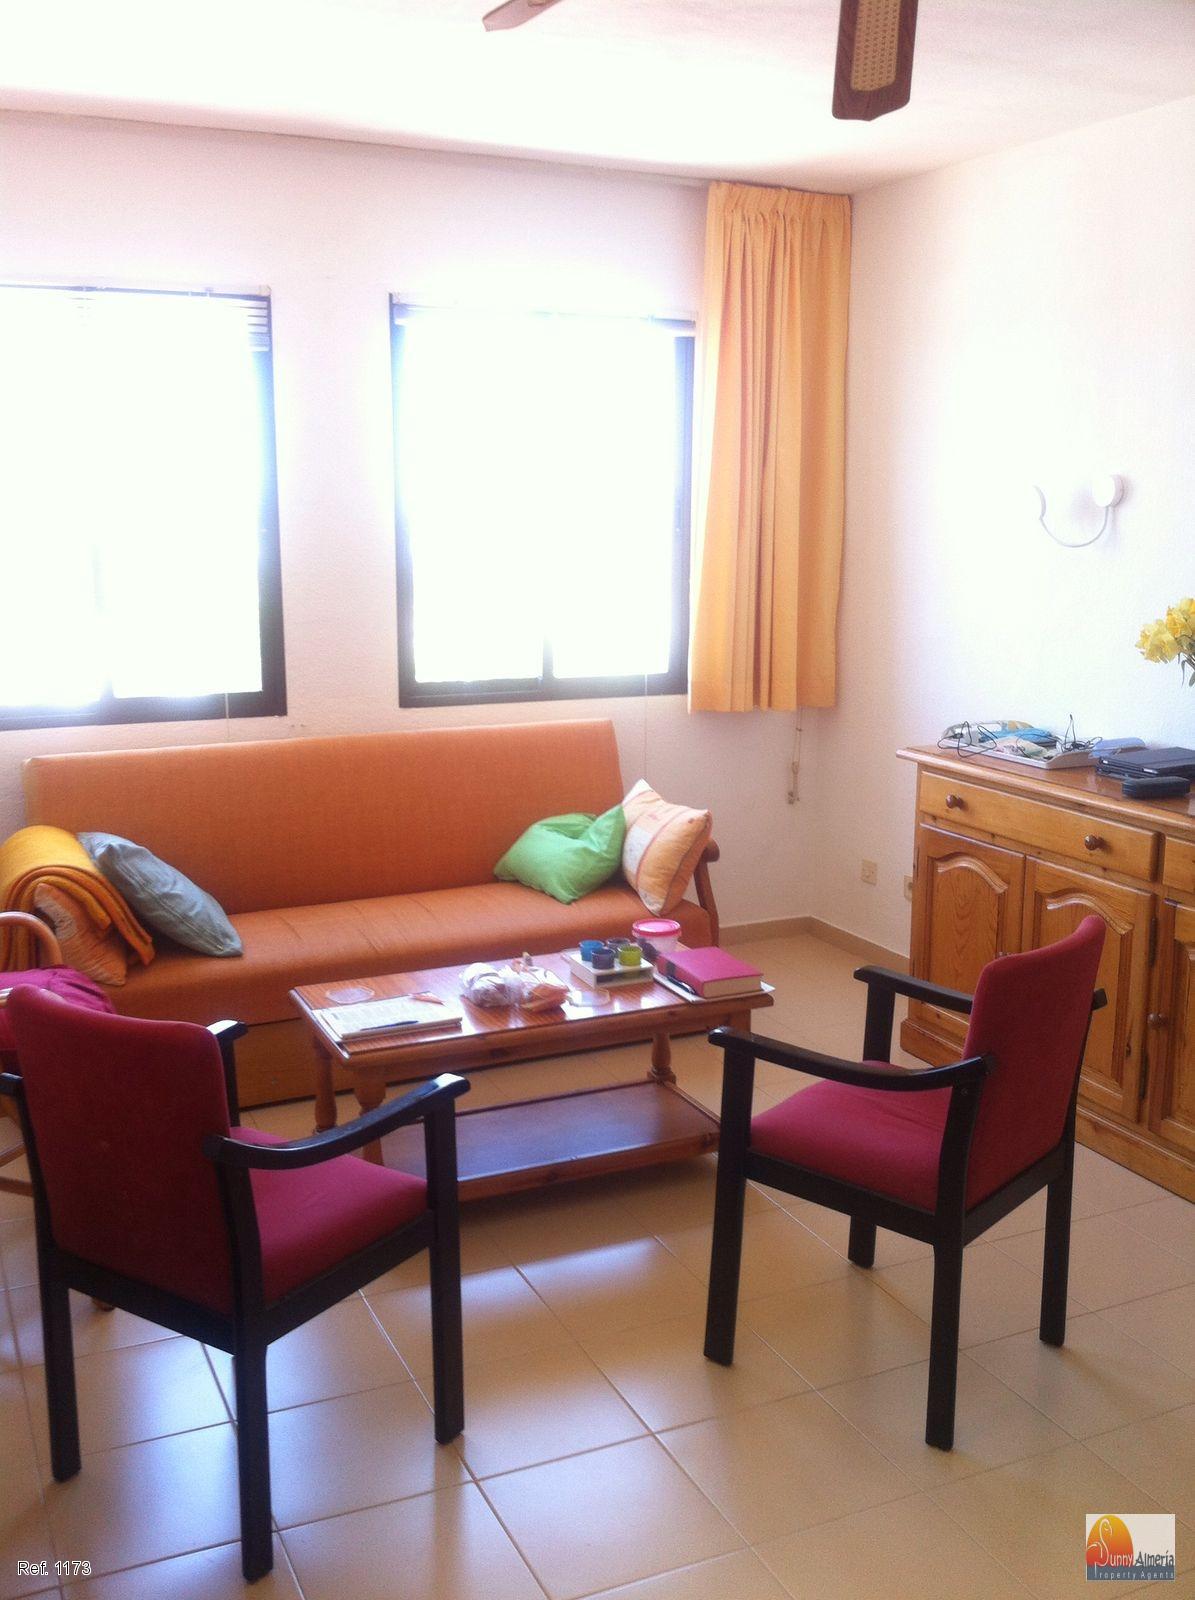 Appartamento in affitto a calle alameda 69 (Roquetas de Mar), 550 €/mese (Stagione)